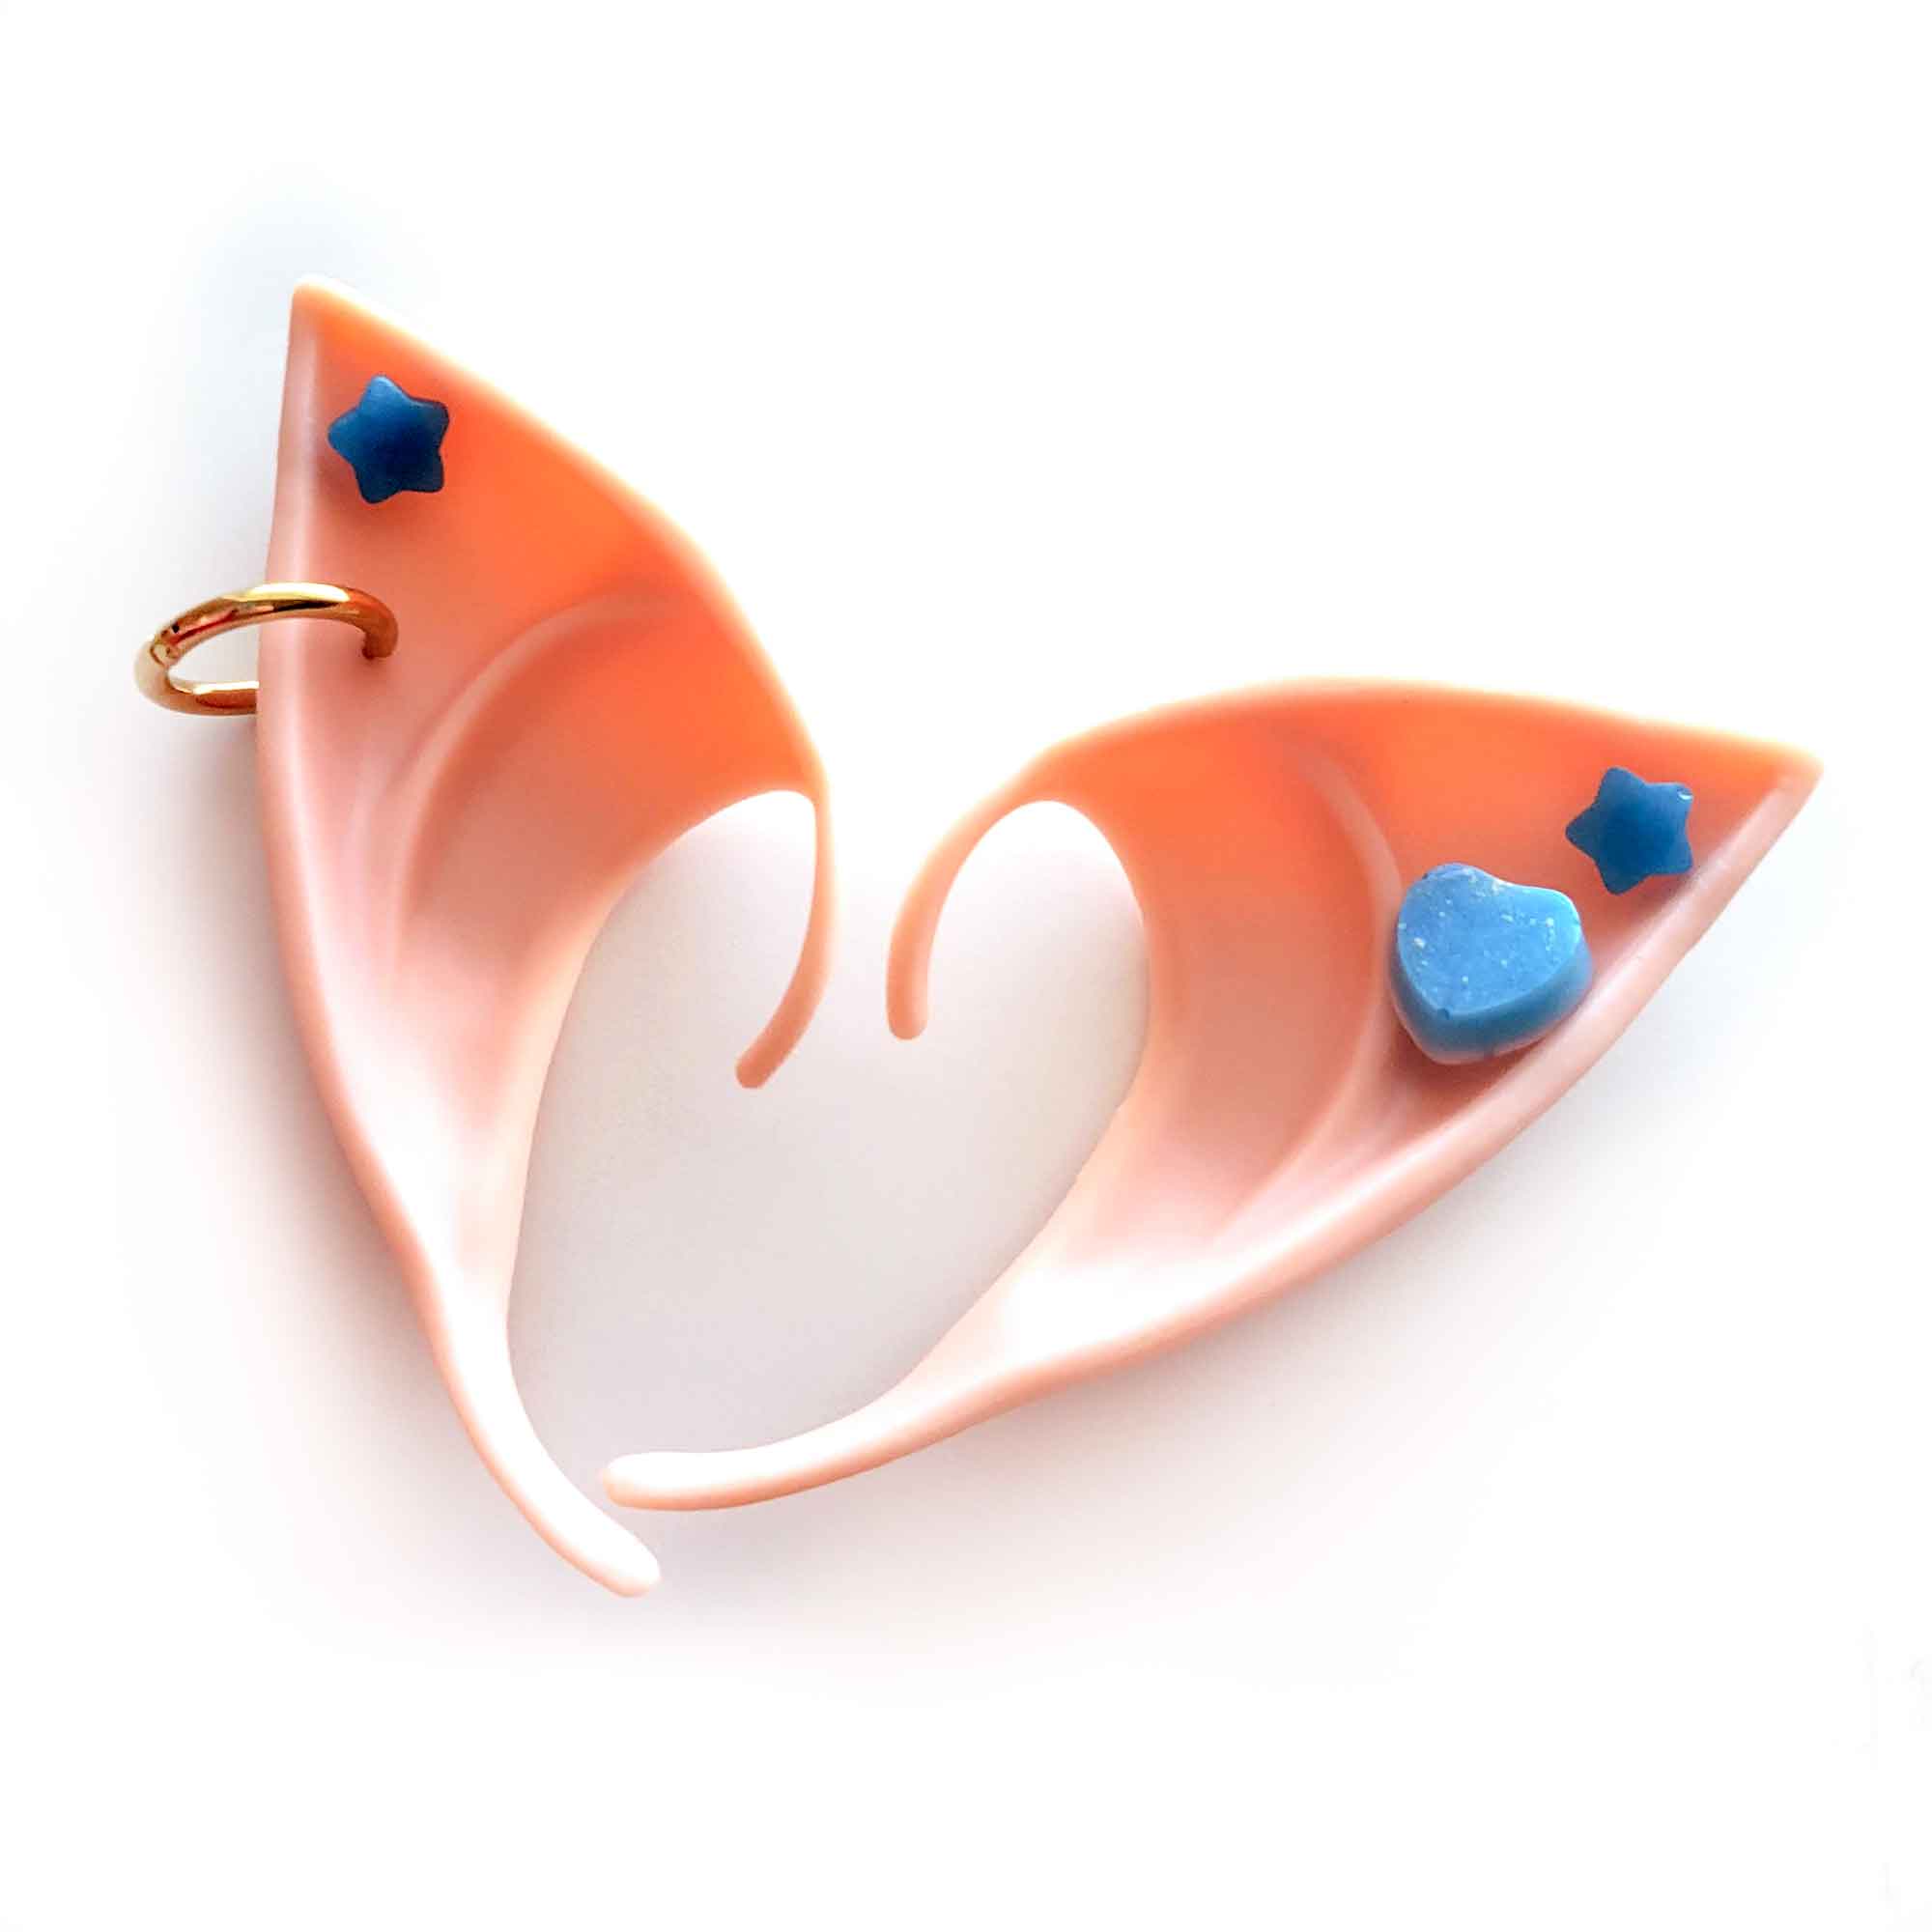 Peach Elf Ears with Blue Earrings by Wilde Designs